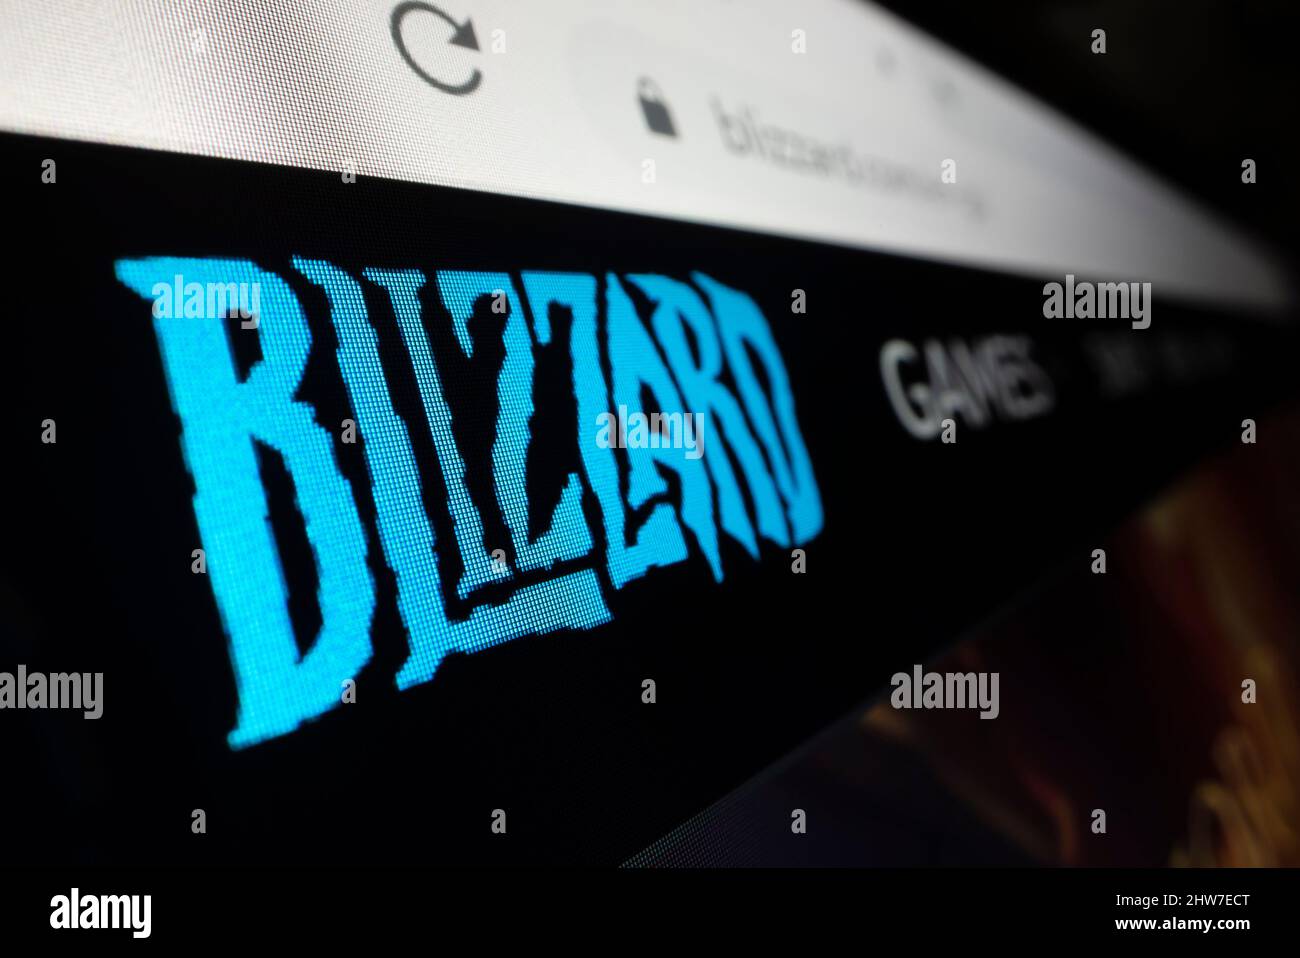 Melbourne, Australia - Feb 4, 2022: Close-up view of Blizzard Entertainment logo on its website, shot with macro probe lens Stock Photo